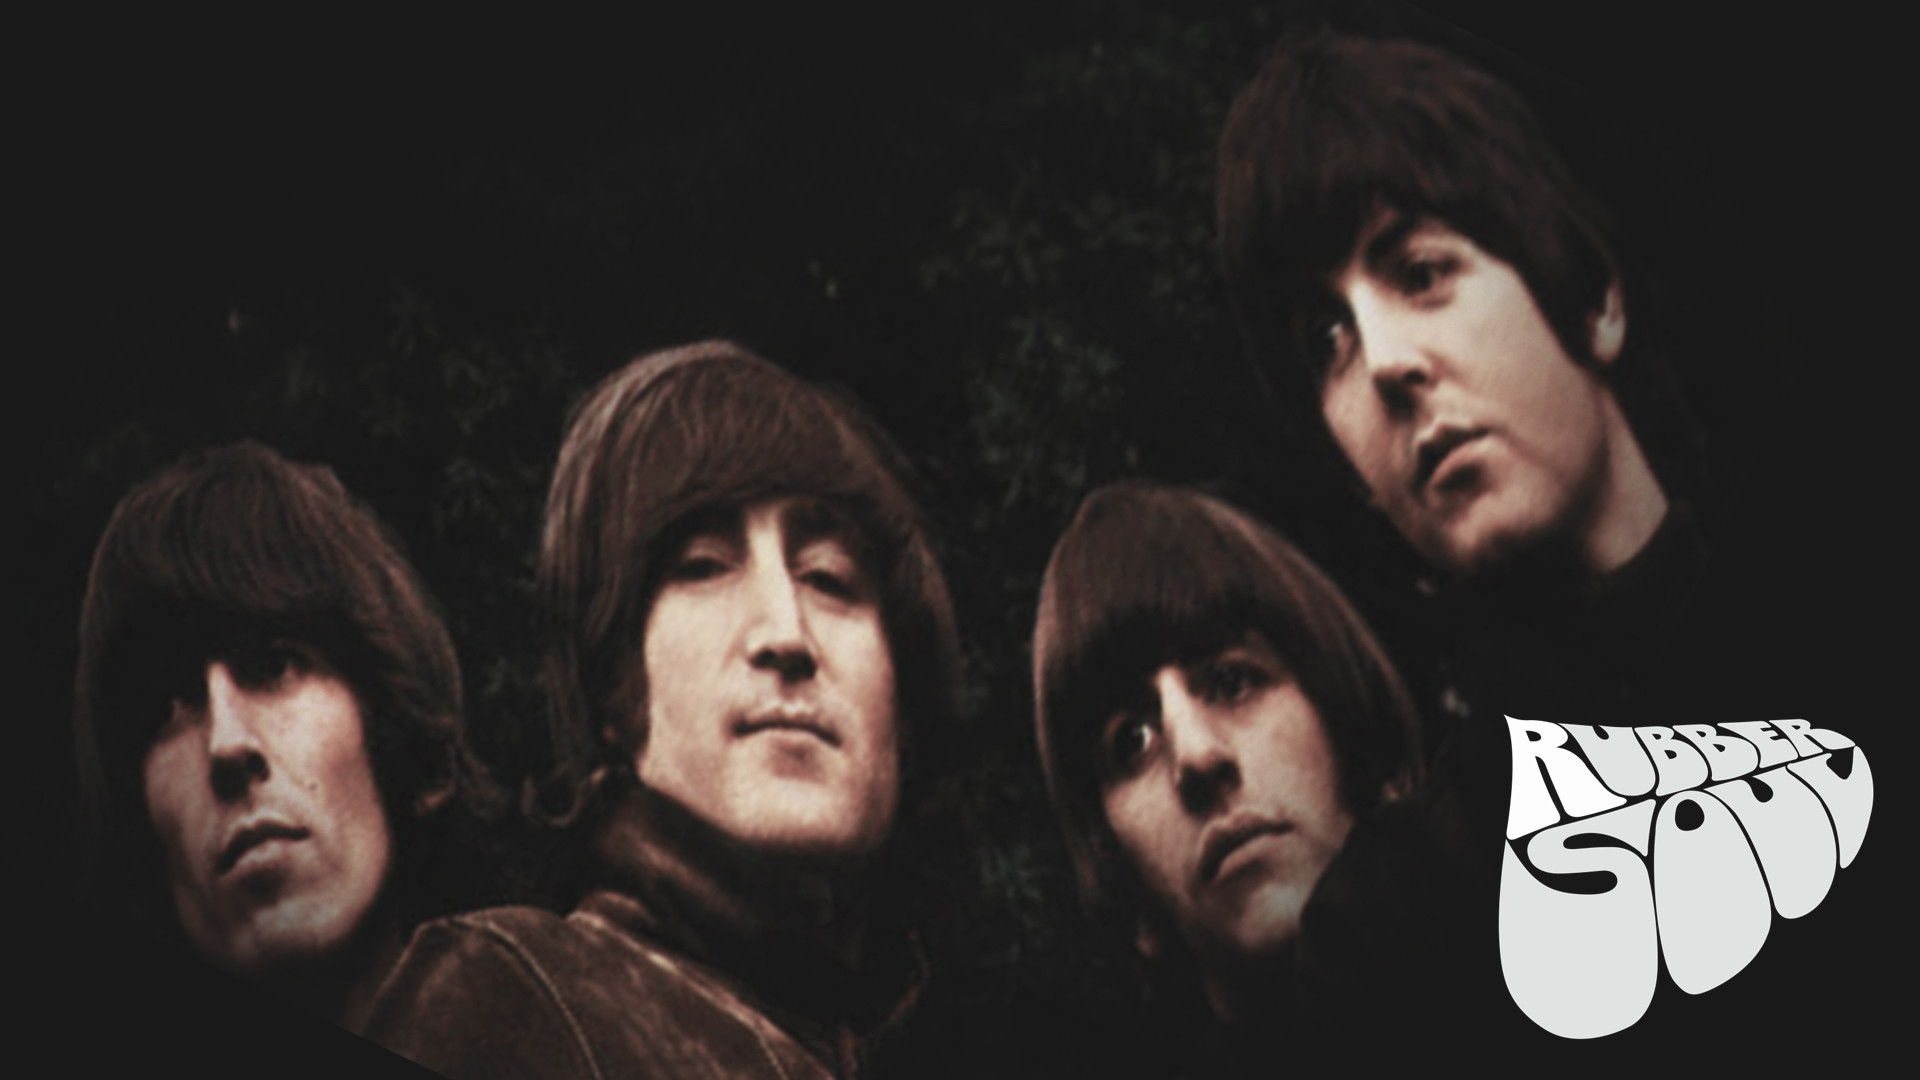 Beatles as Desktop Background